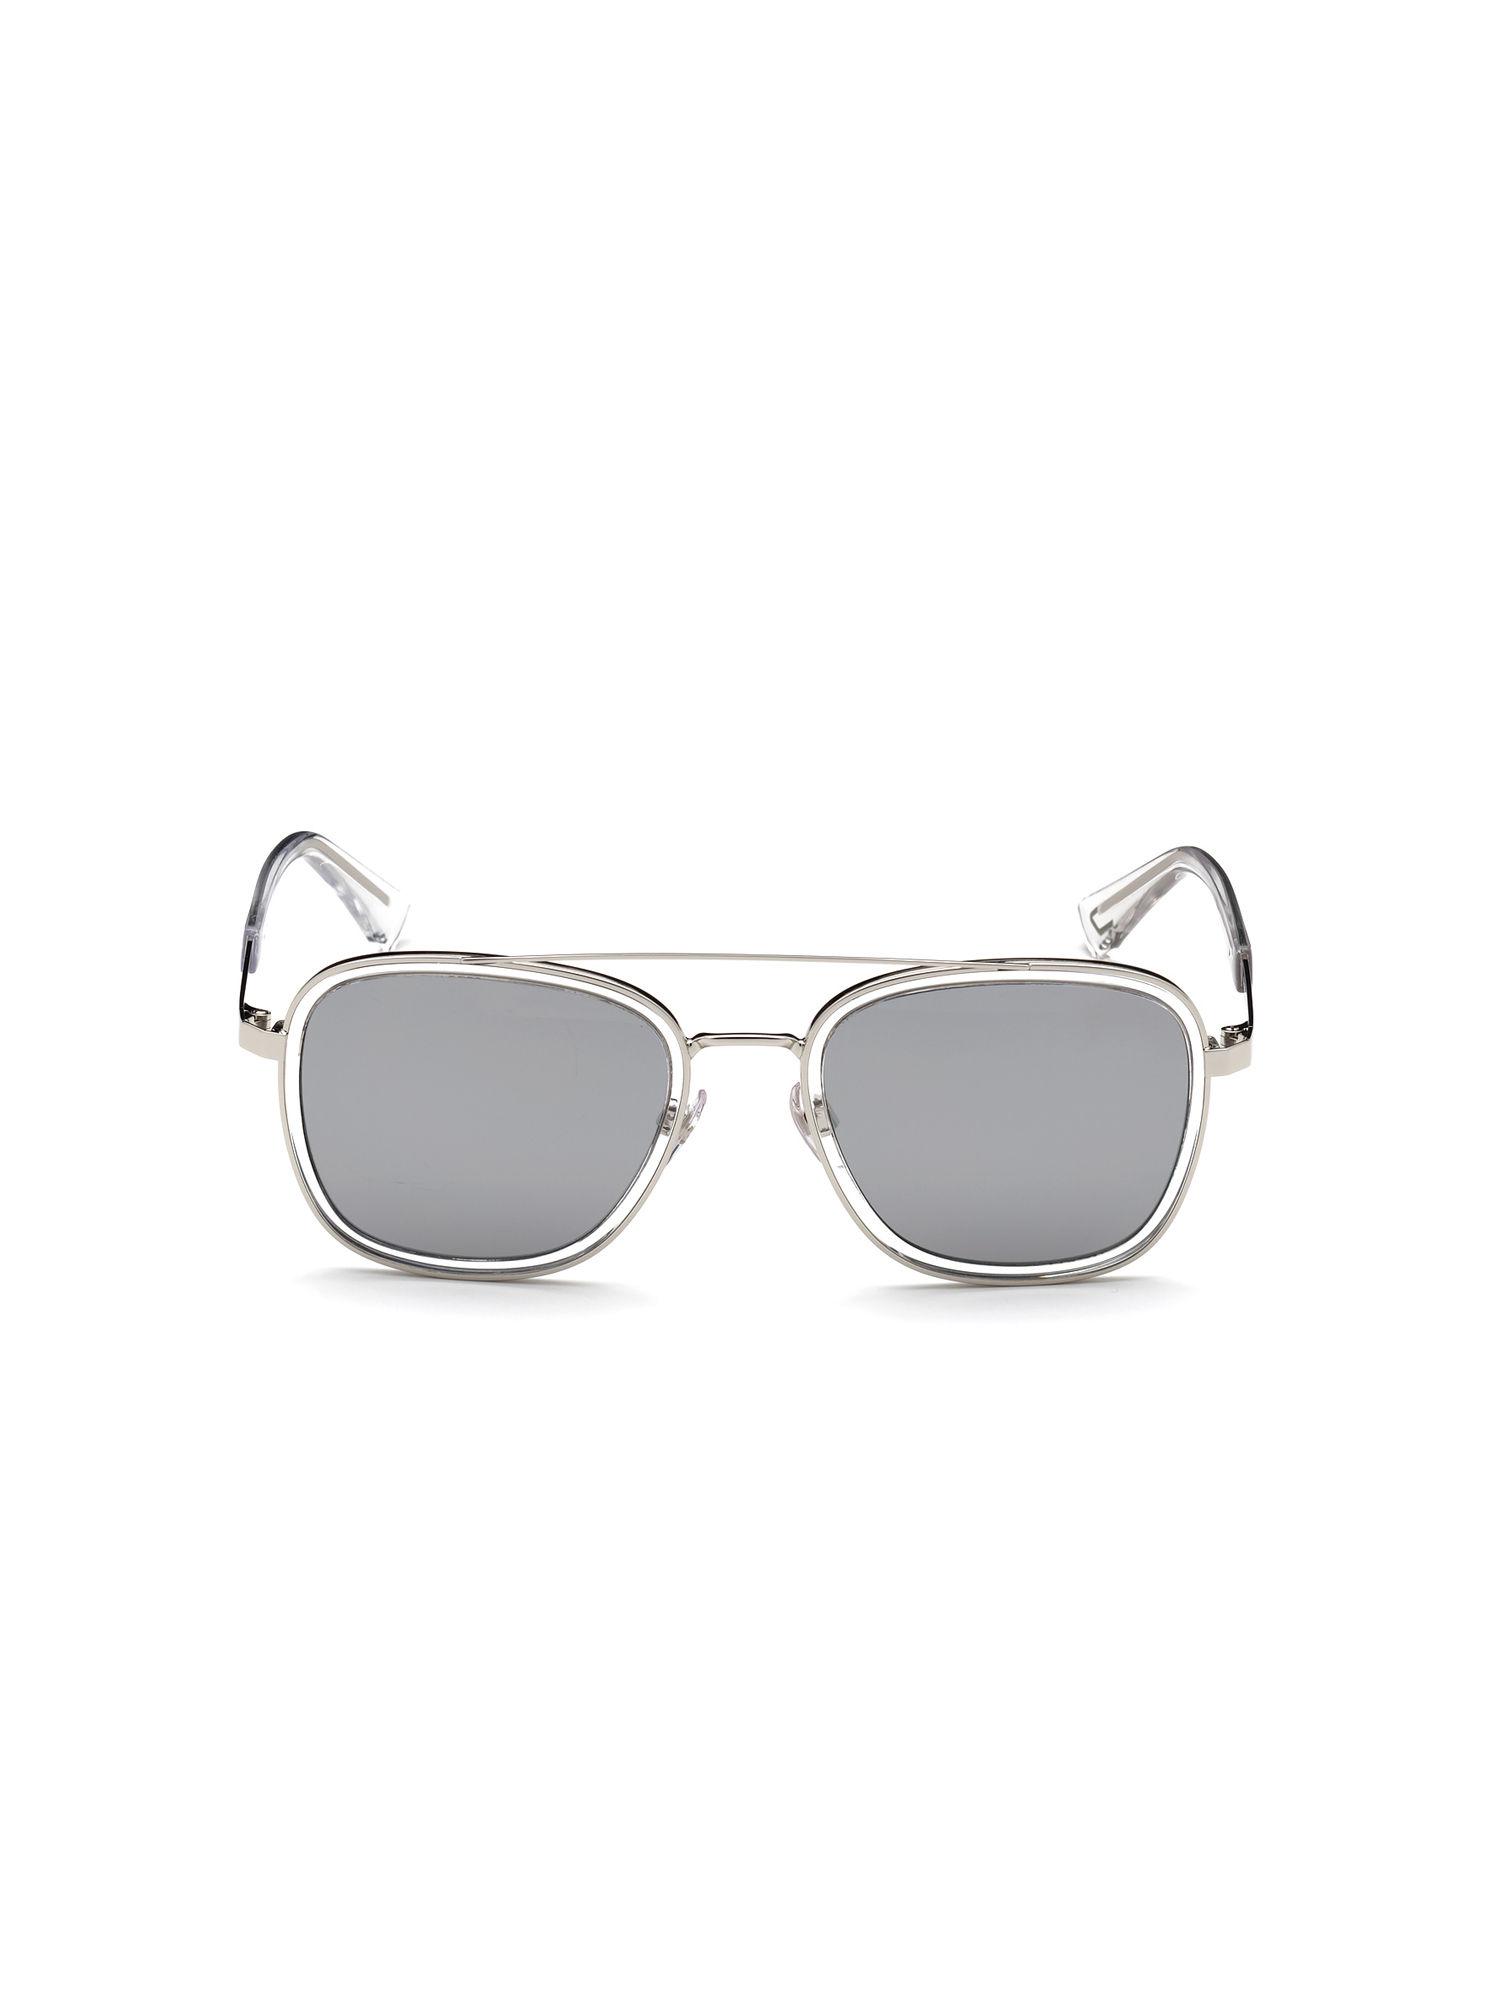 silver square full rim sunglasses - dl0320 52 16c